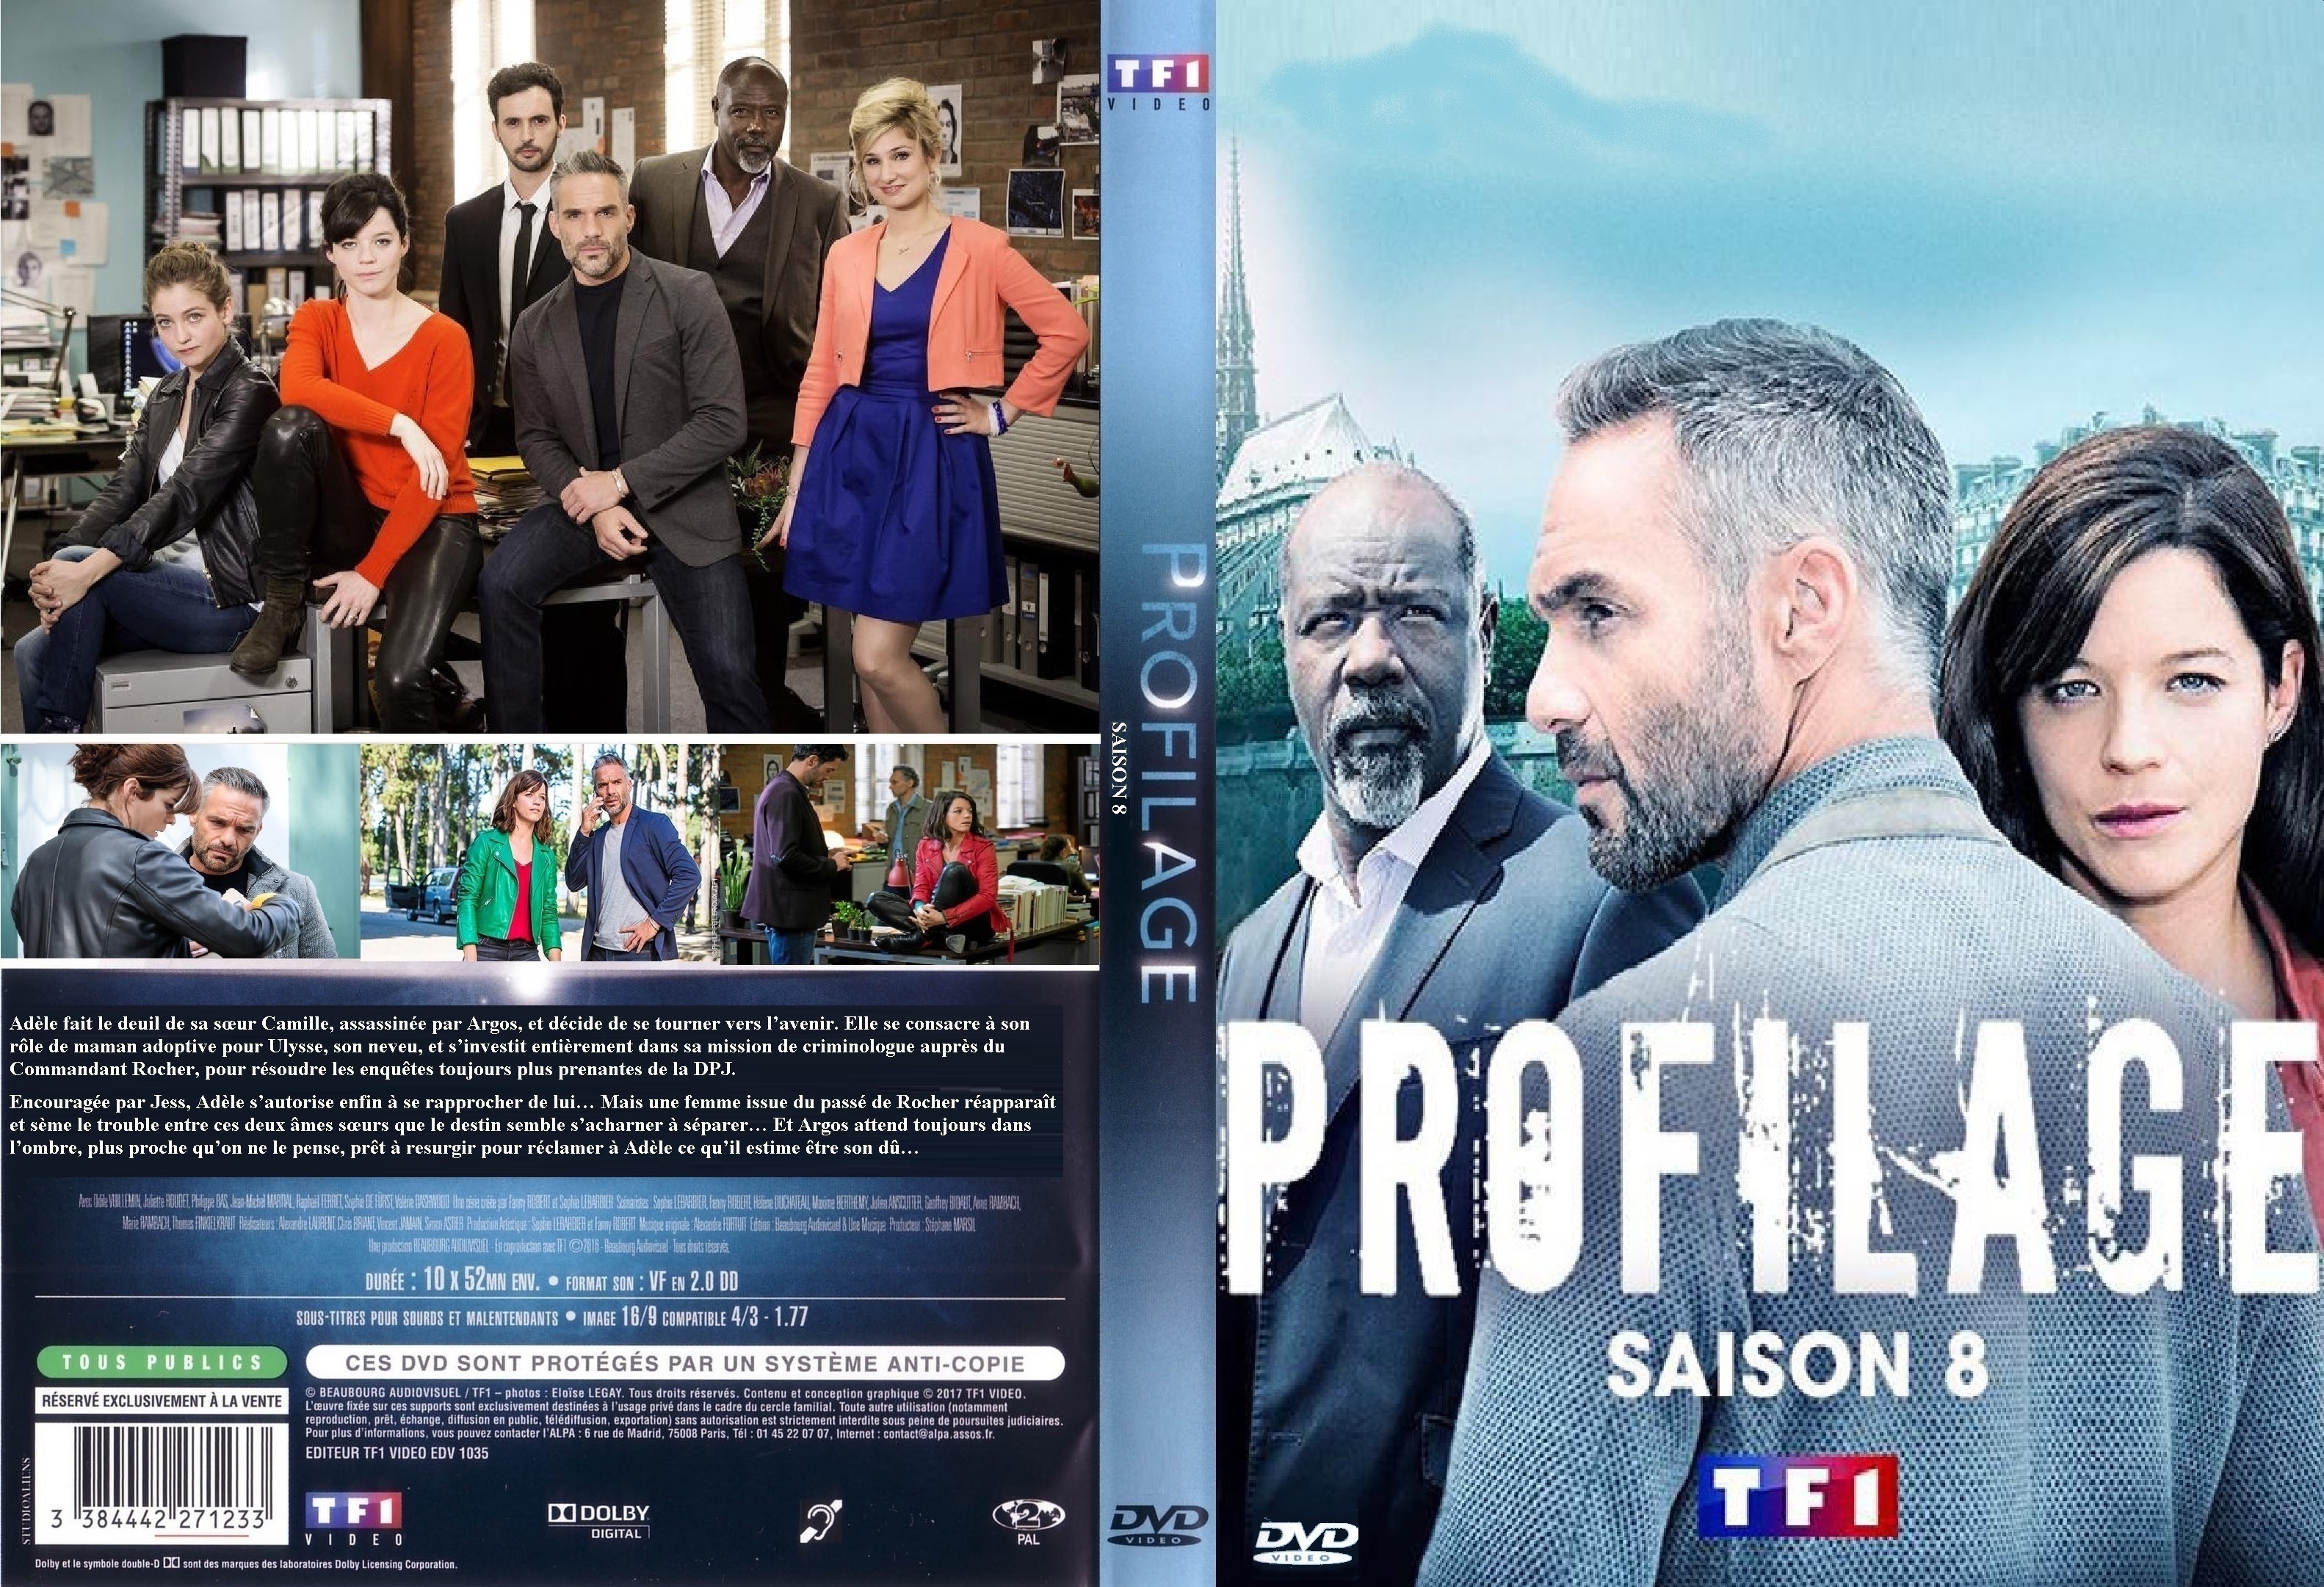 Jaquette DVD Profilage saison 8 custom